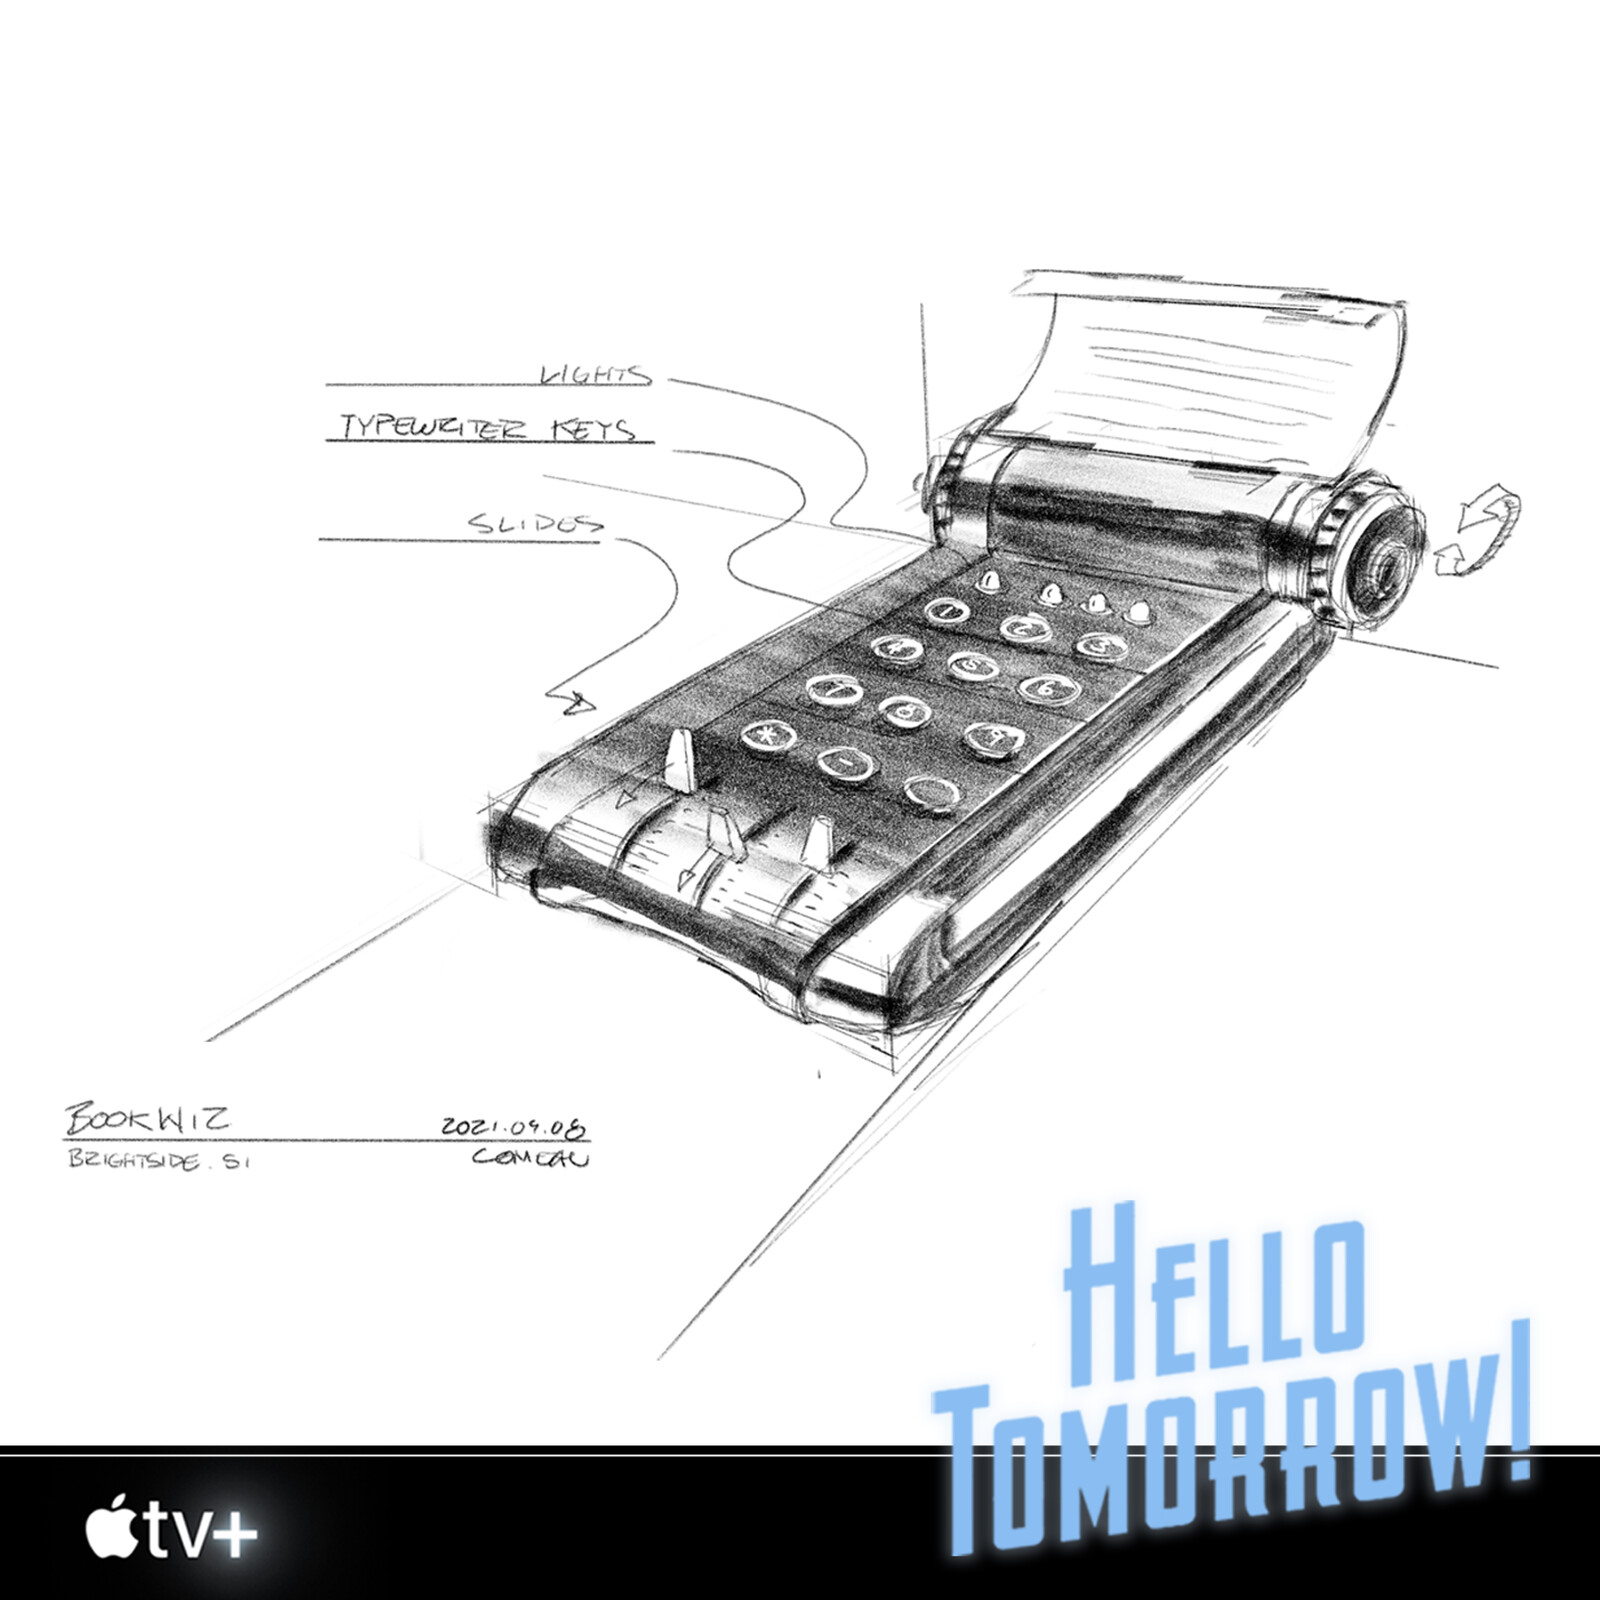 Hello Tomorrow - Gadgets